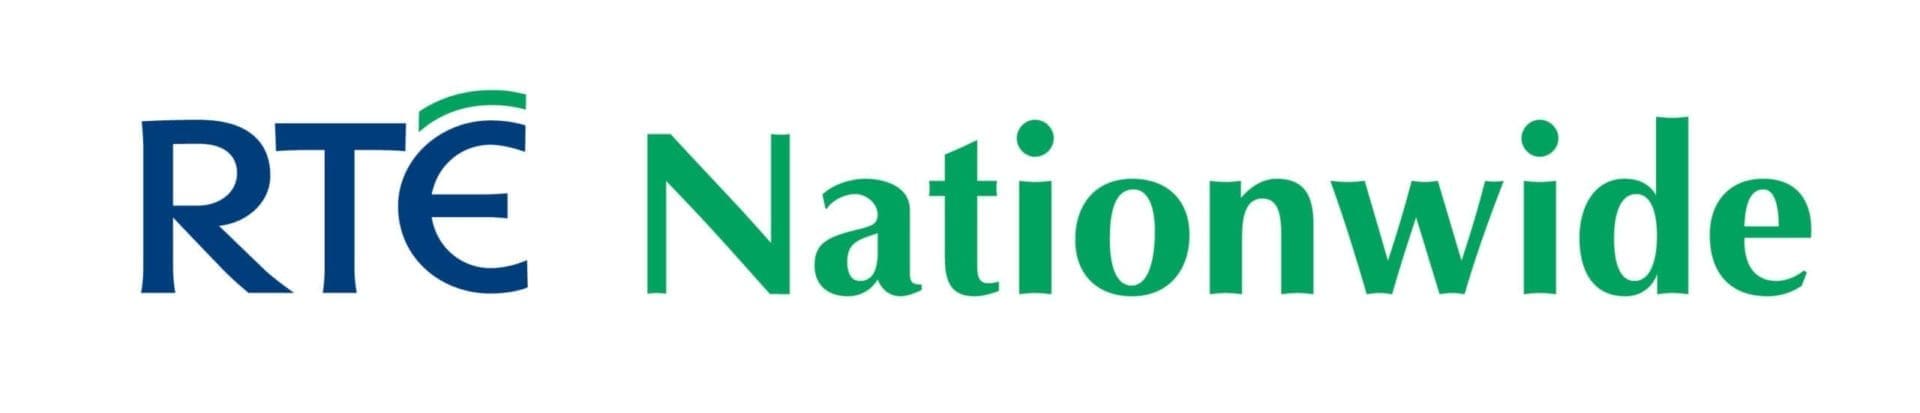 RTE Nationwide Logo